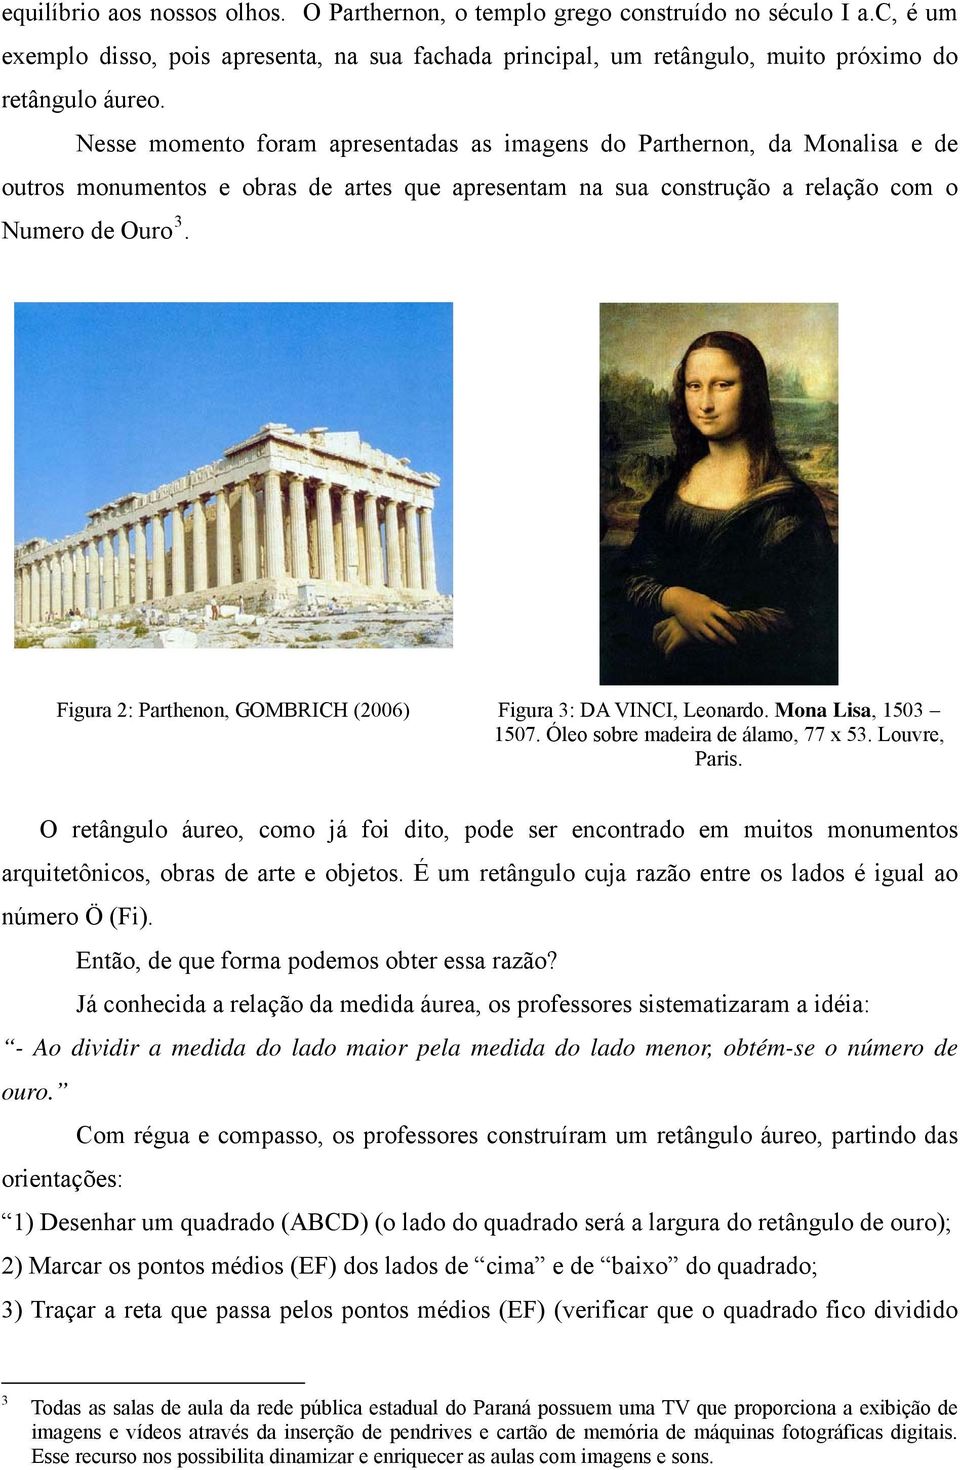 Figura 2: Parthenon, GOMBRICH (2006) Figura 3: DA VINCI, Leonardo. Mona Lisa, 1503 1507. Óleo sobre madeira de álamo, 77 x 53. Louvre, Paris.